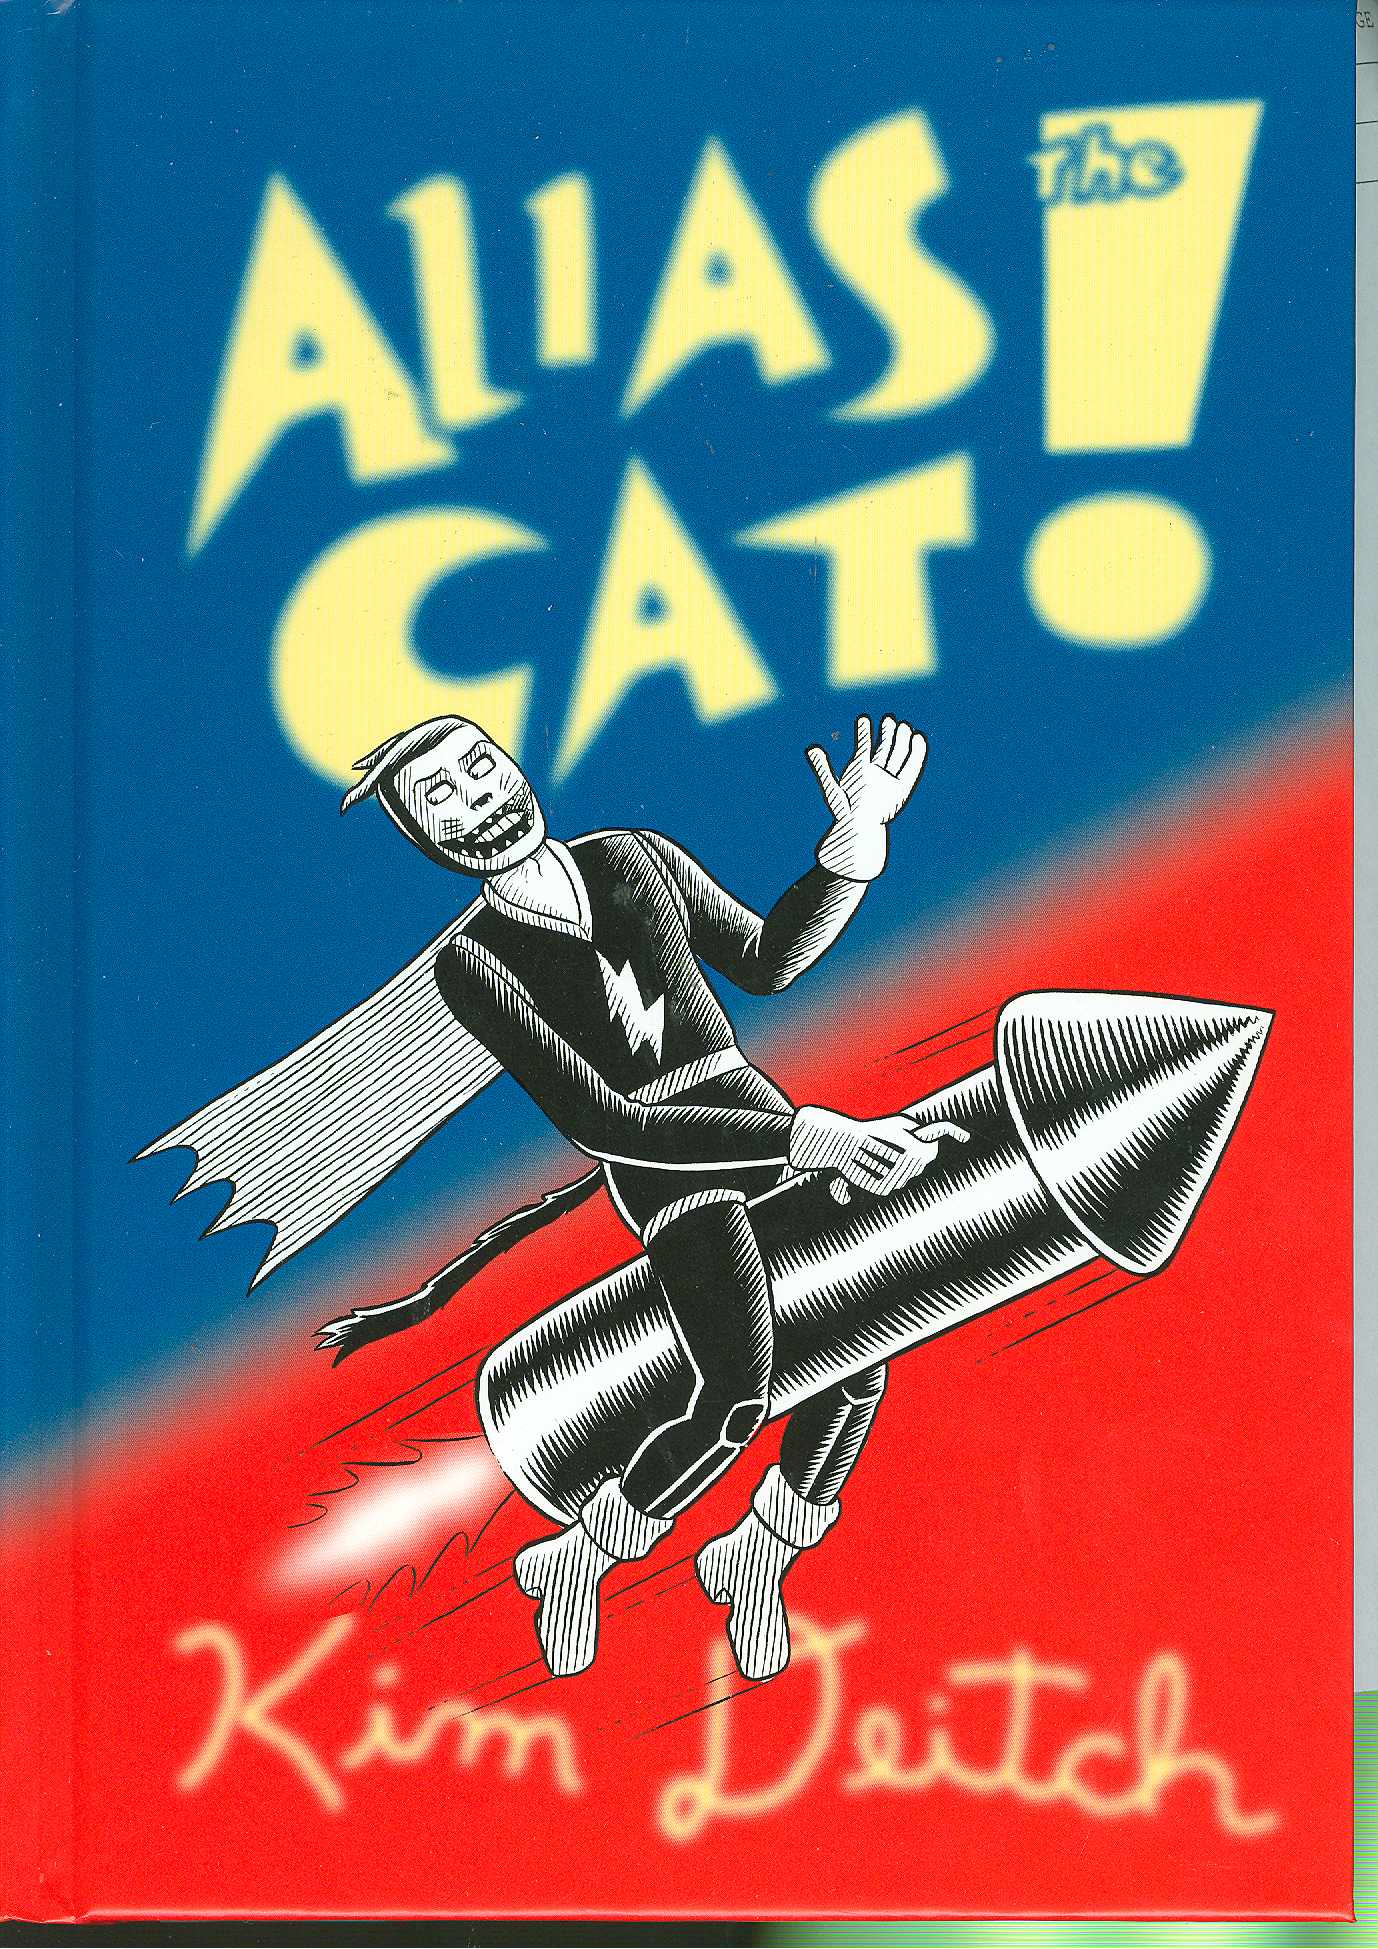 Alias the Cat Graphic Novel